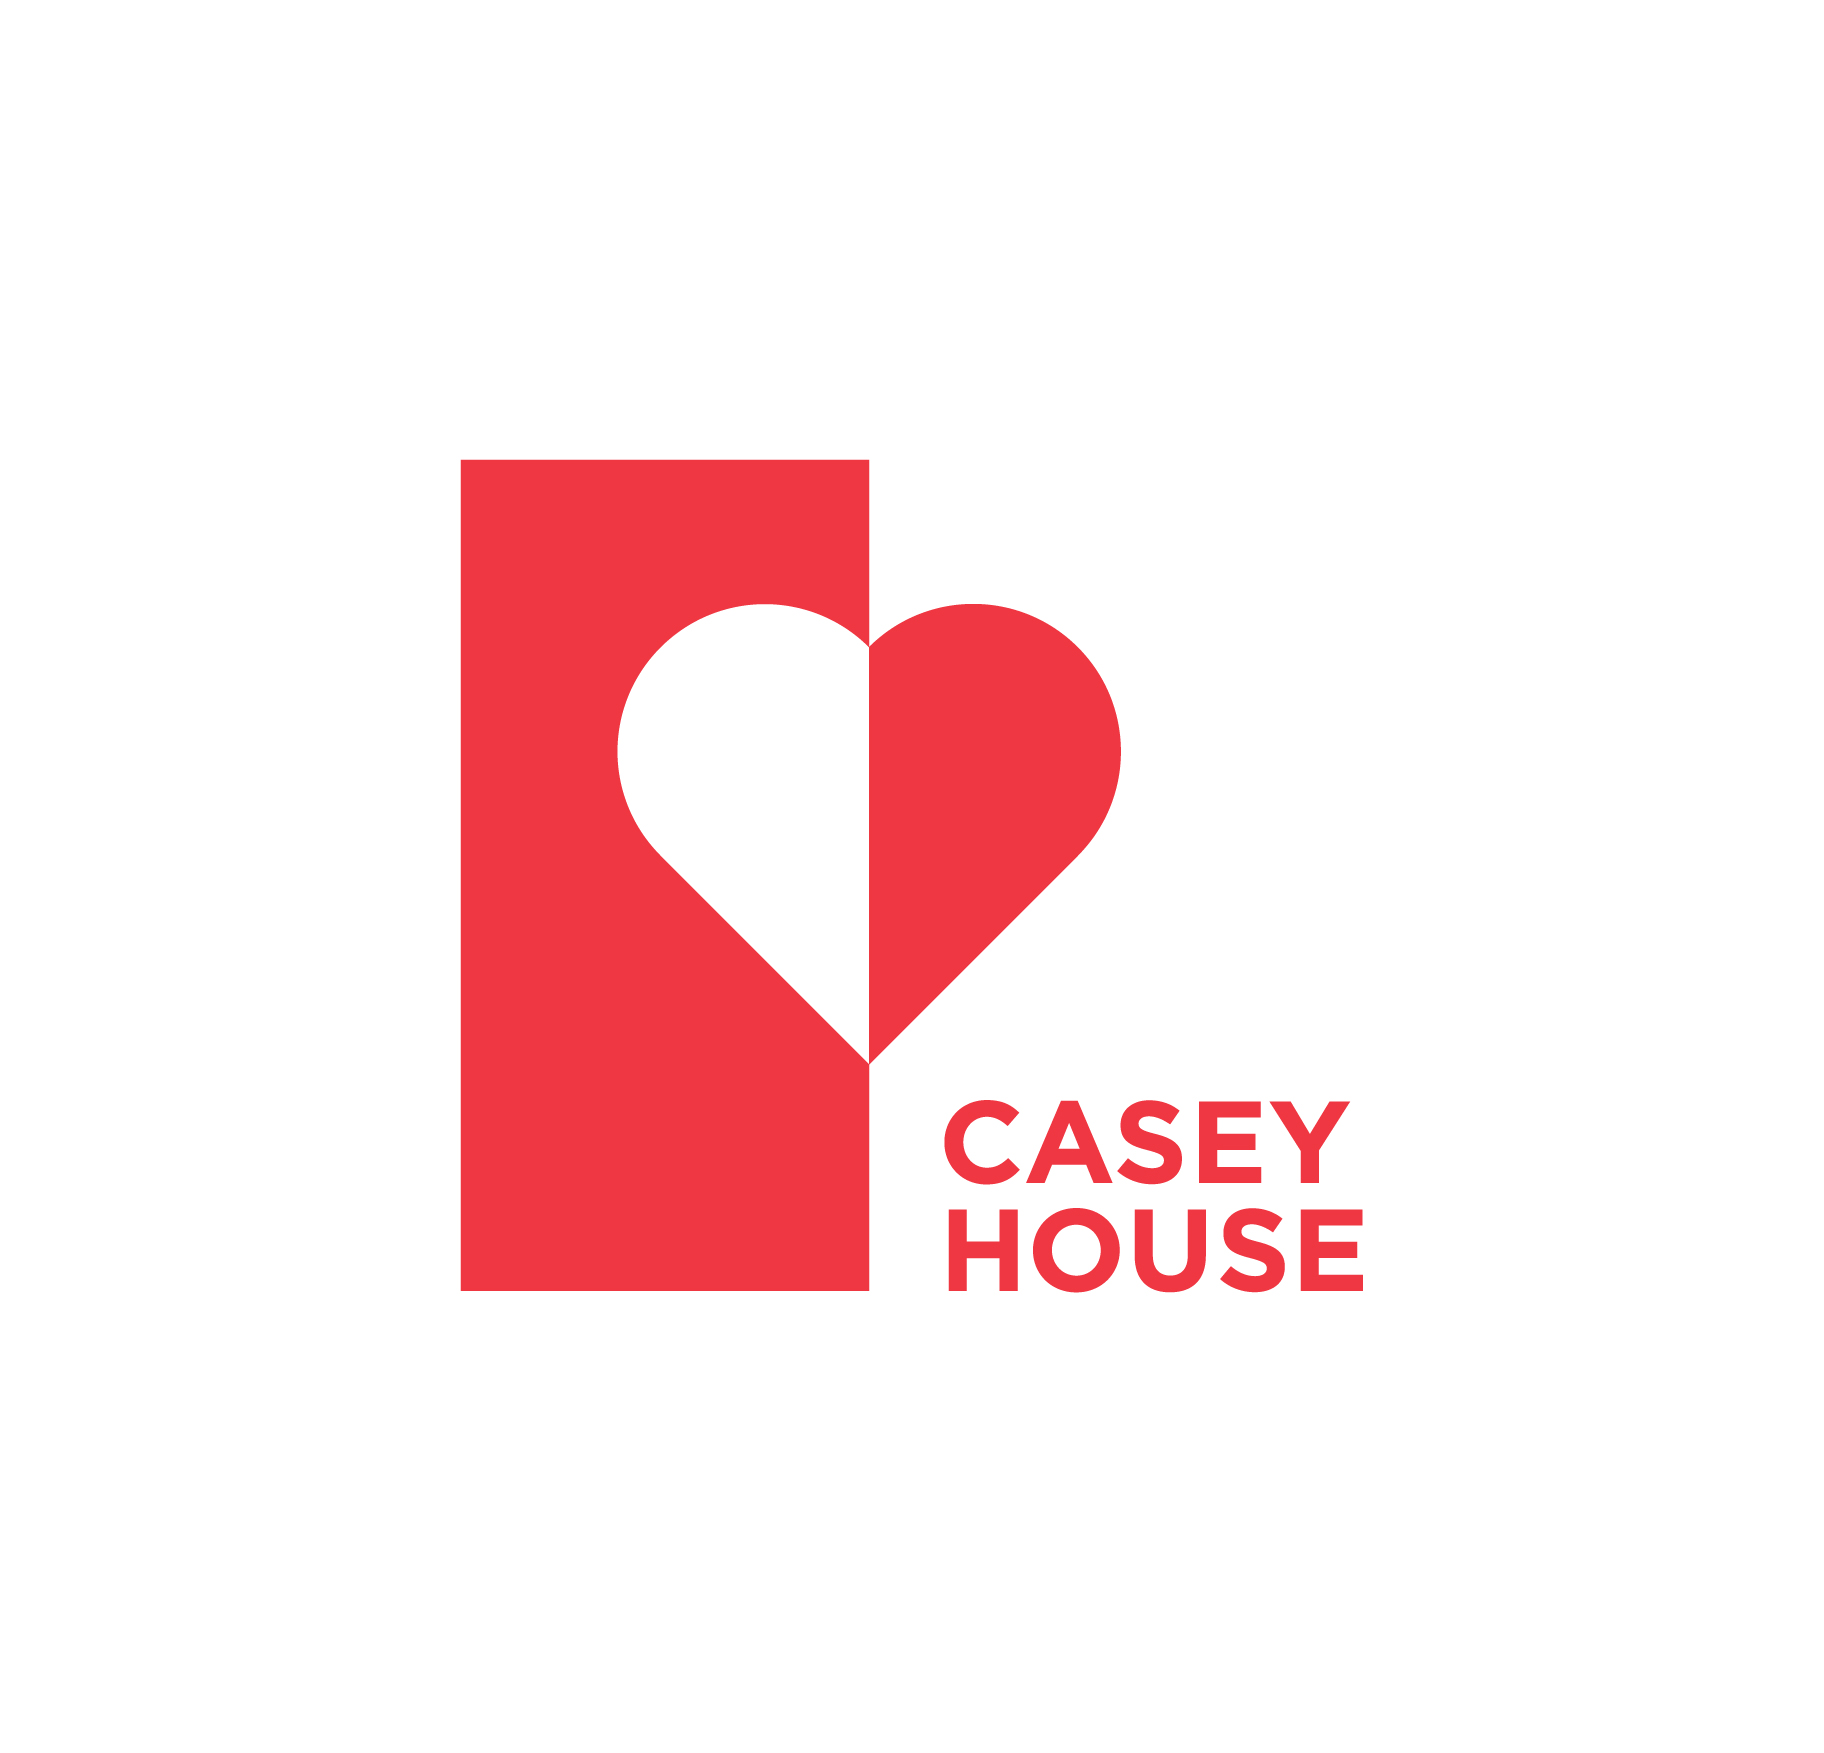 Organization logo of Casey House Hospital